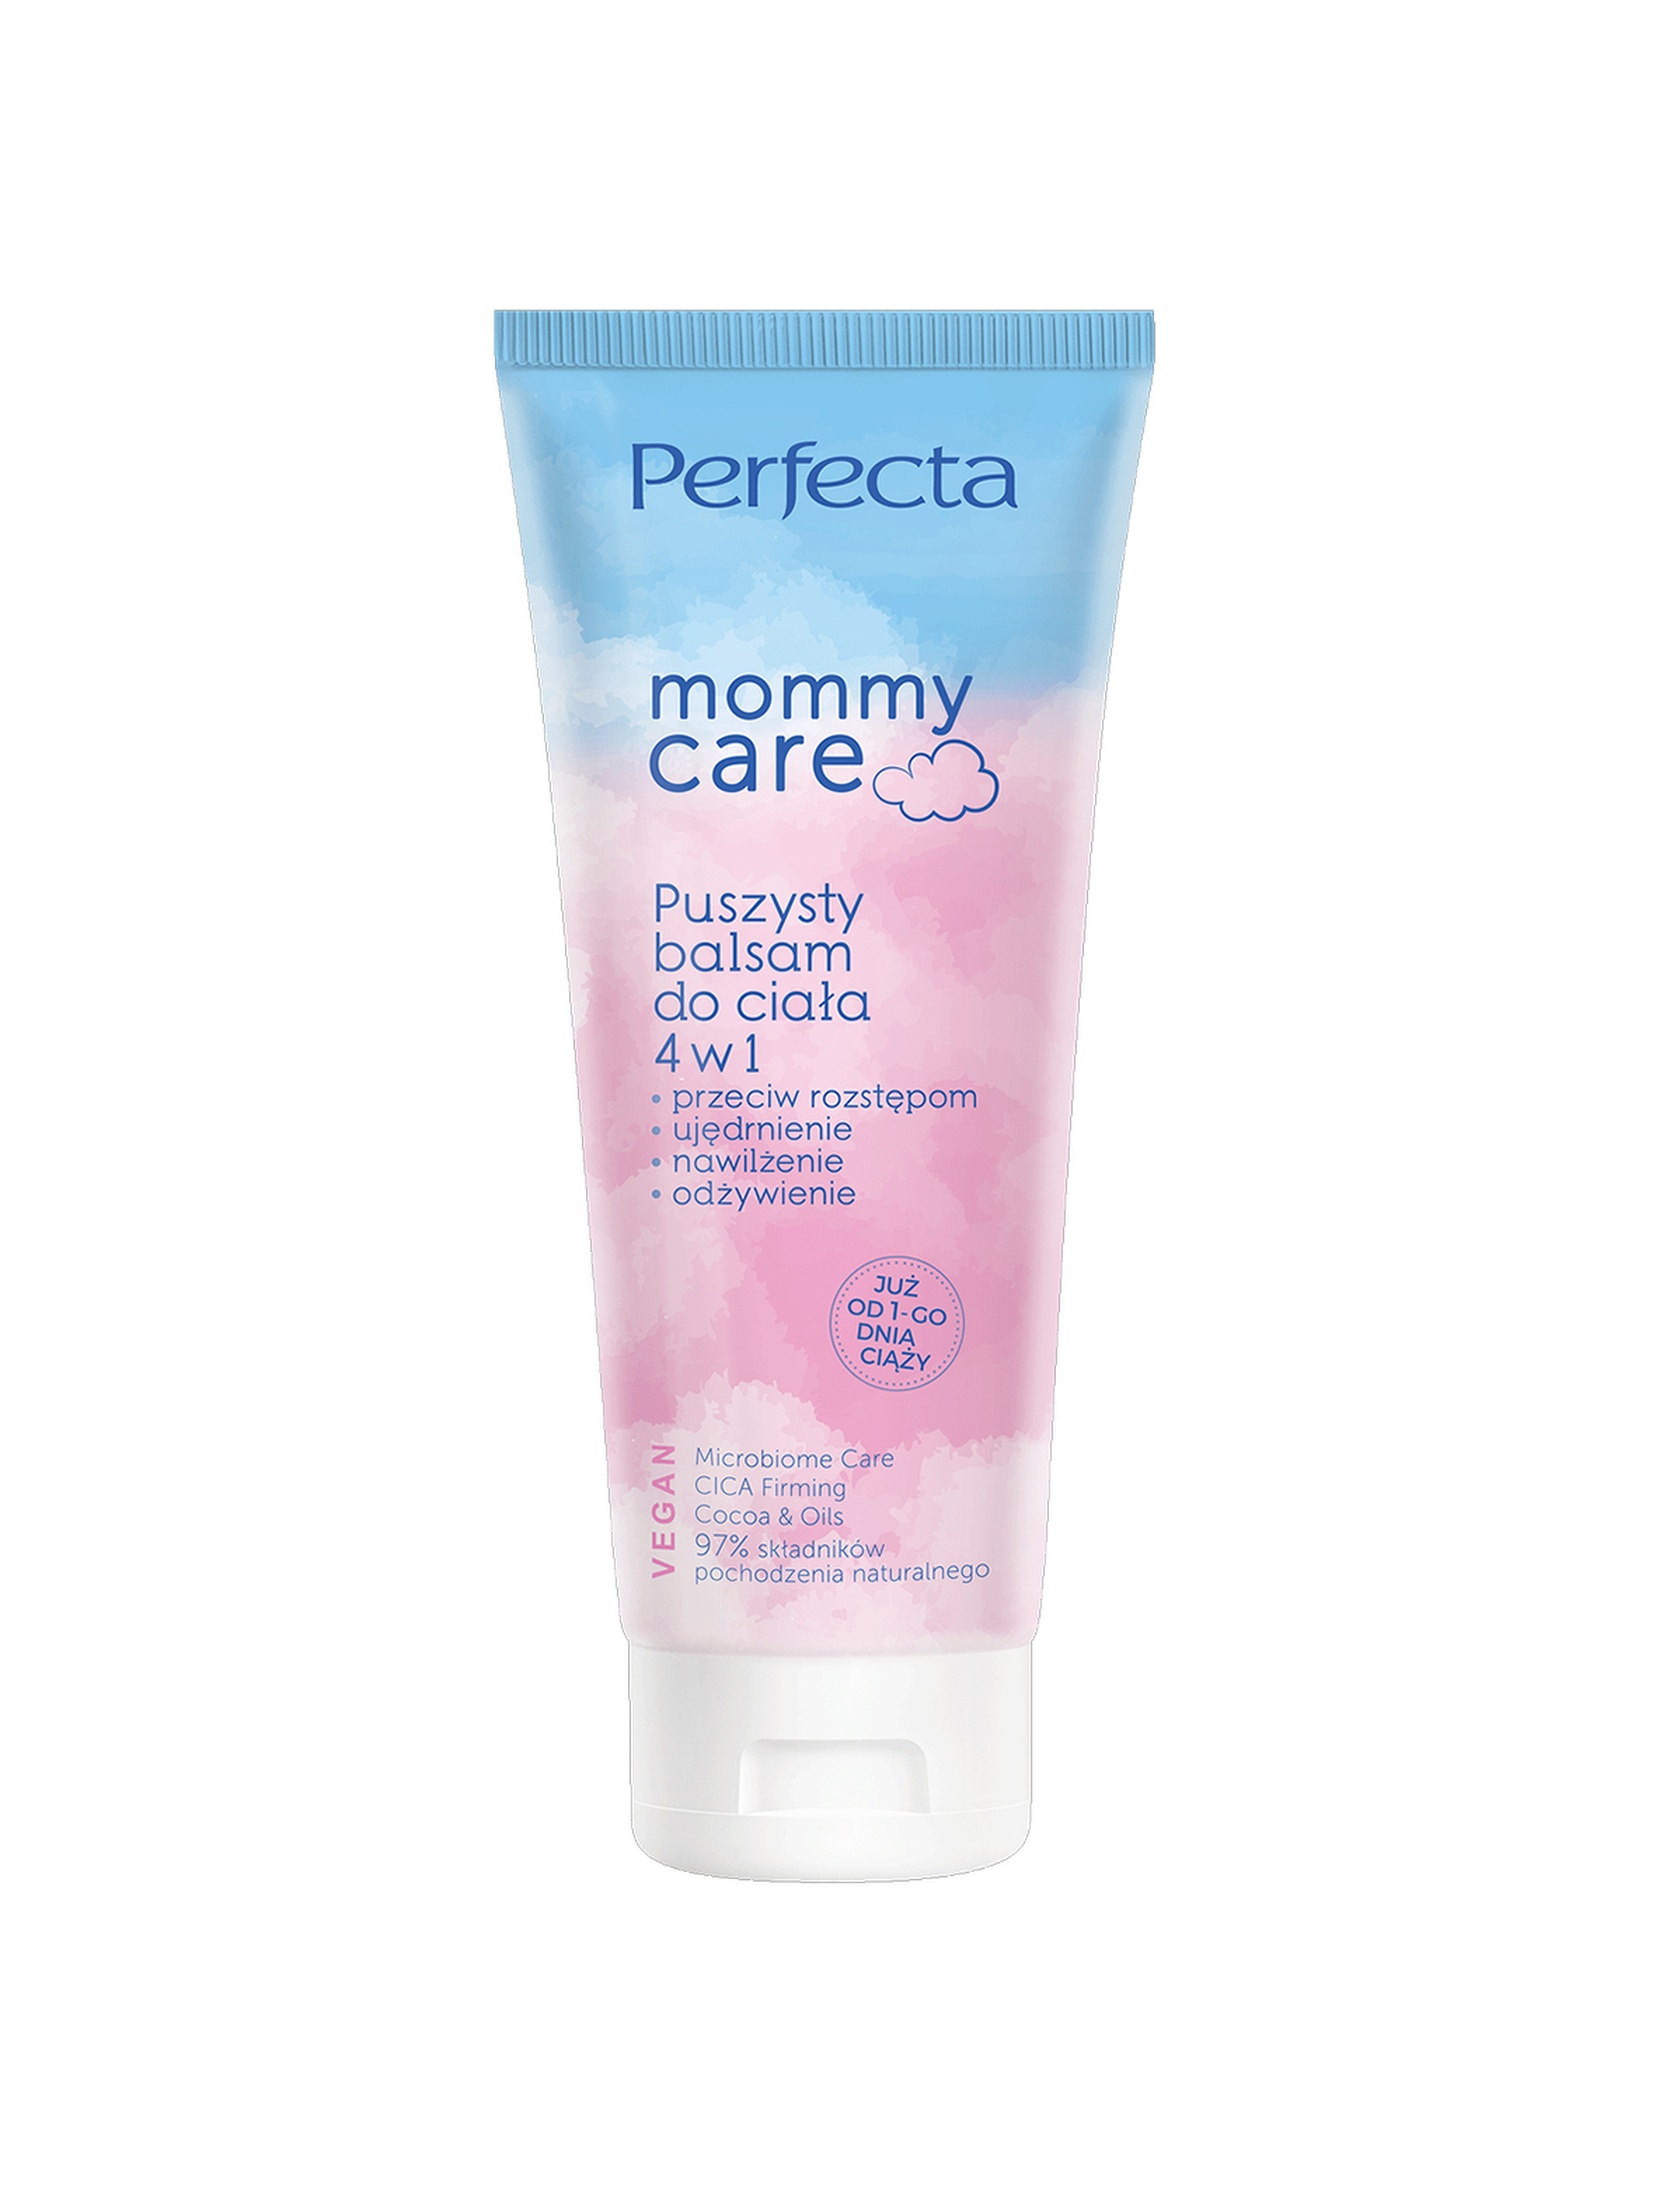 Perfecta Mommy Care, puszysty balsam 4w1, 200 ml